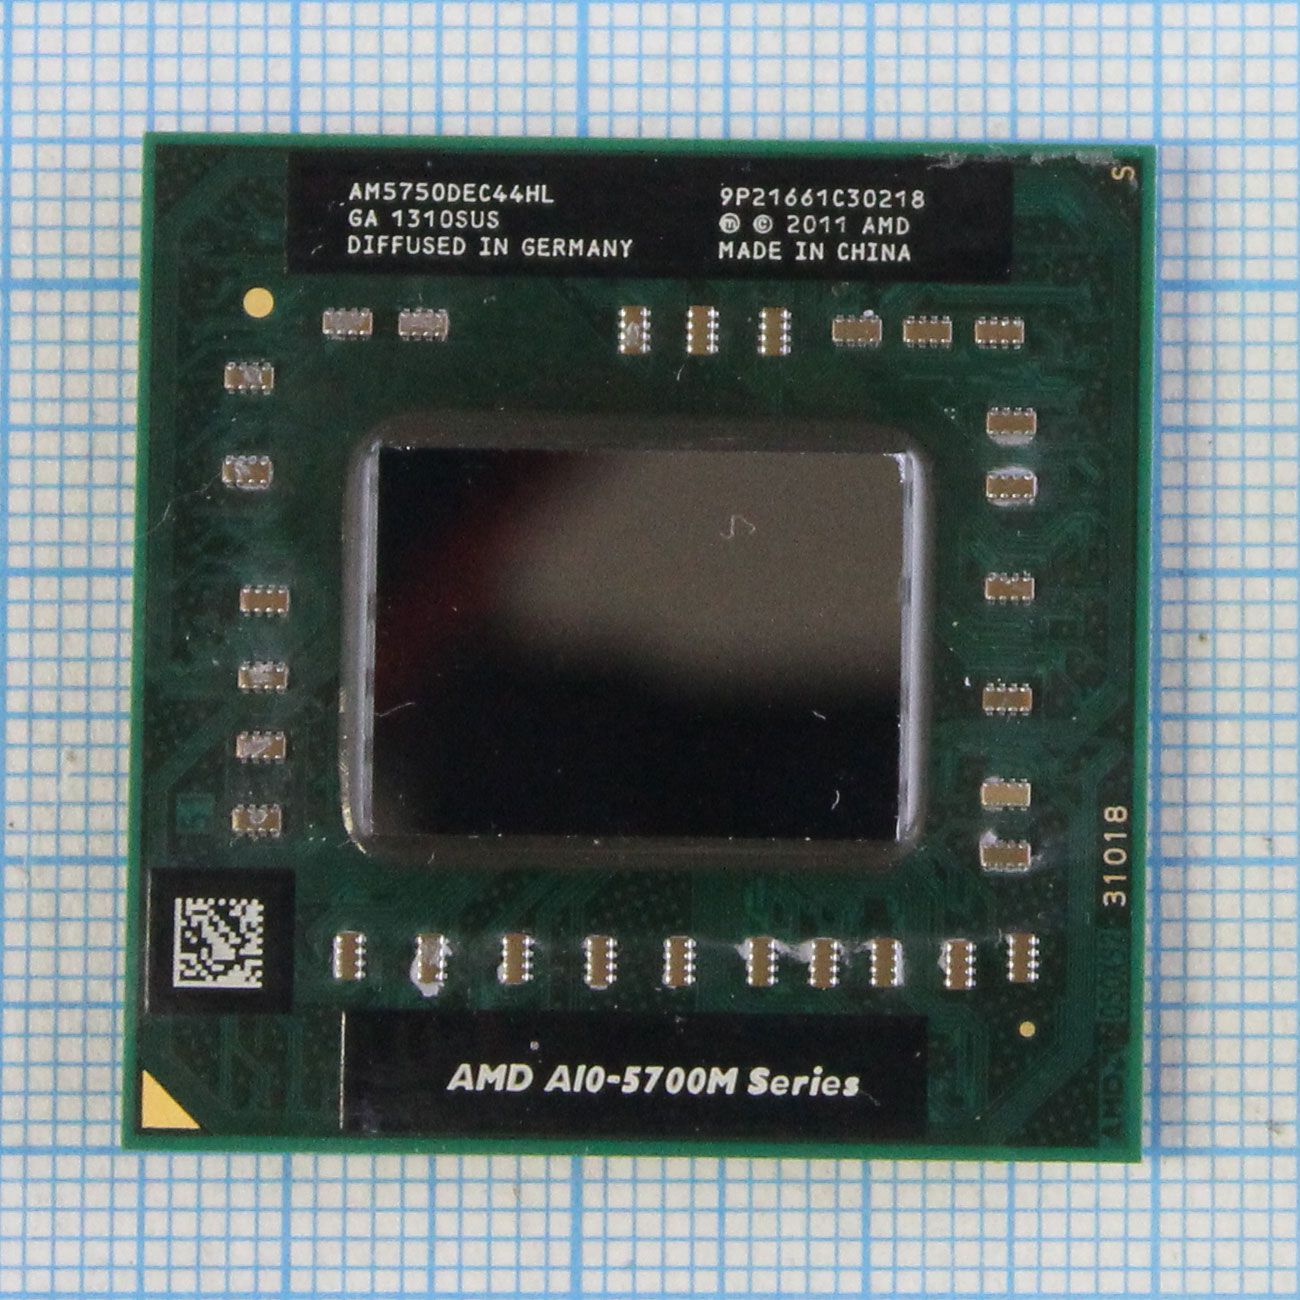 Сокет fs1. AMD a10 4600m. A10-4600m. Процессор Socket fs1 AMD a10-5750m - (am5750dec44hl) Richland 2500(3500) MHZ - 2000 руб.. APU AMD a10-5750m.